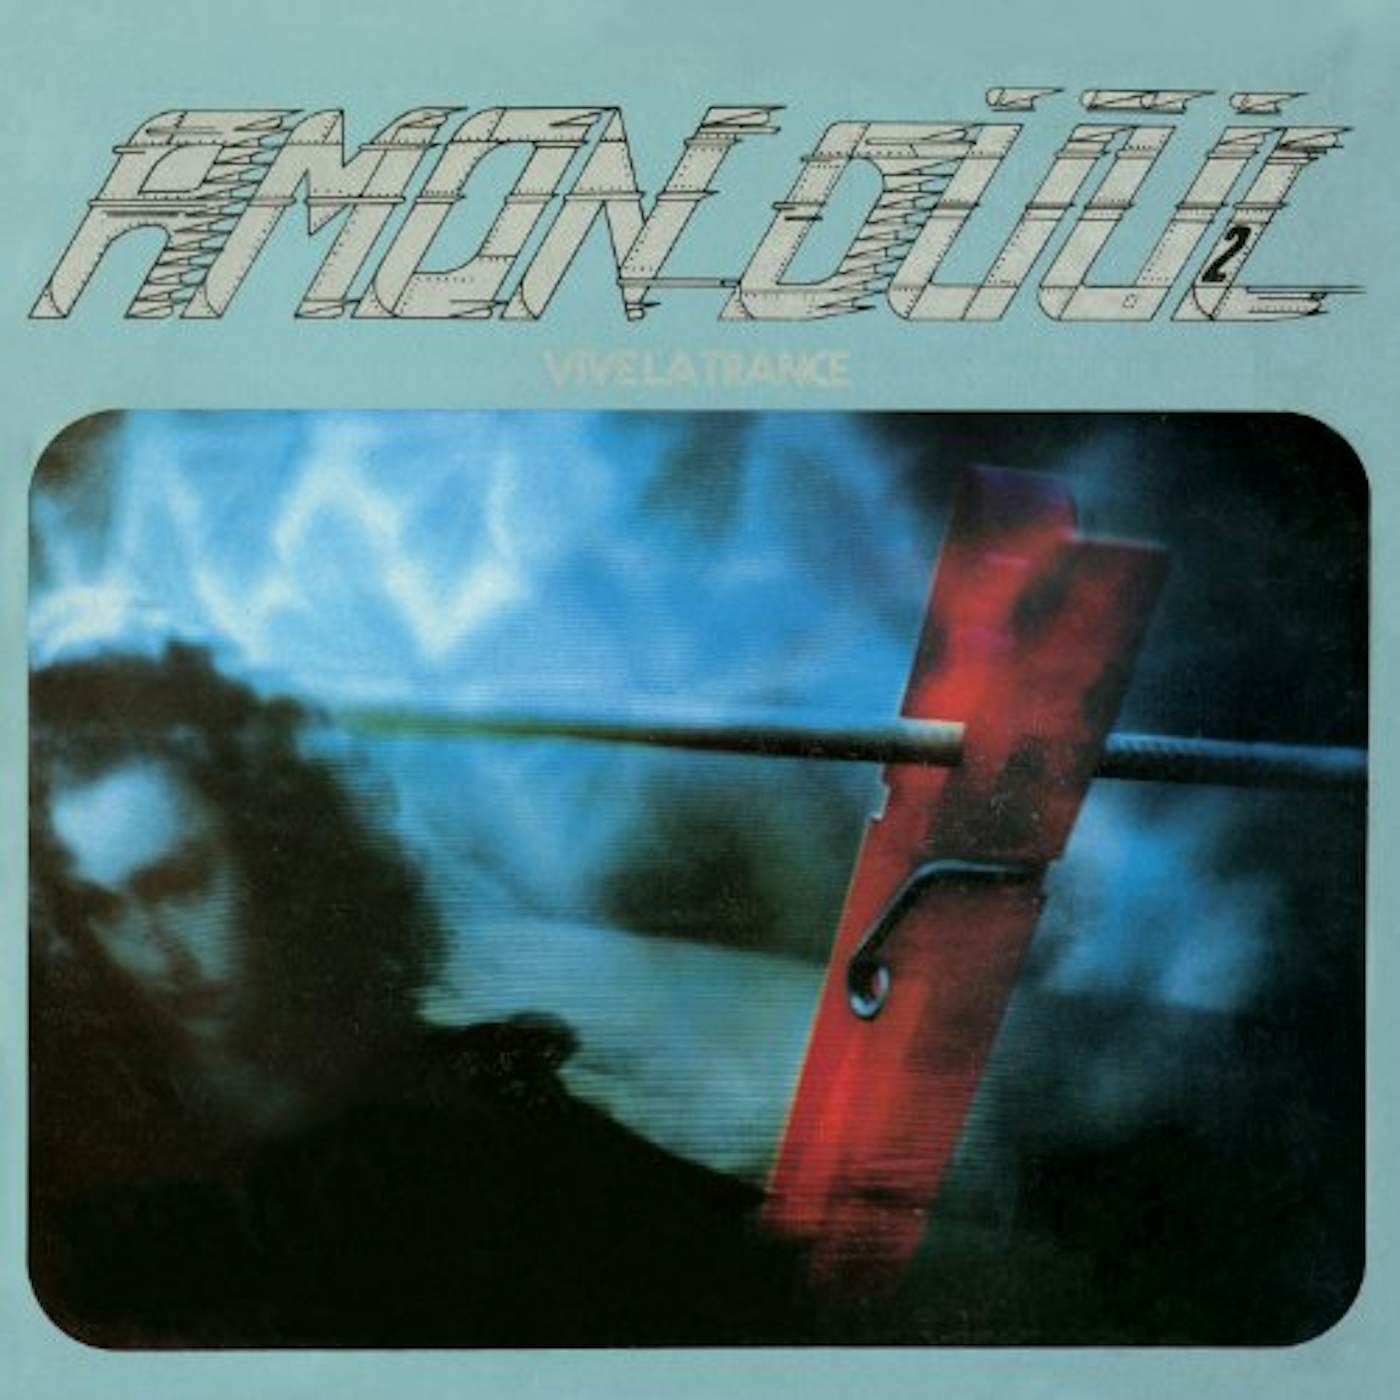 Amon Düül II Vive La Trance Vinyl Record